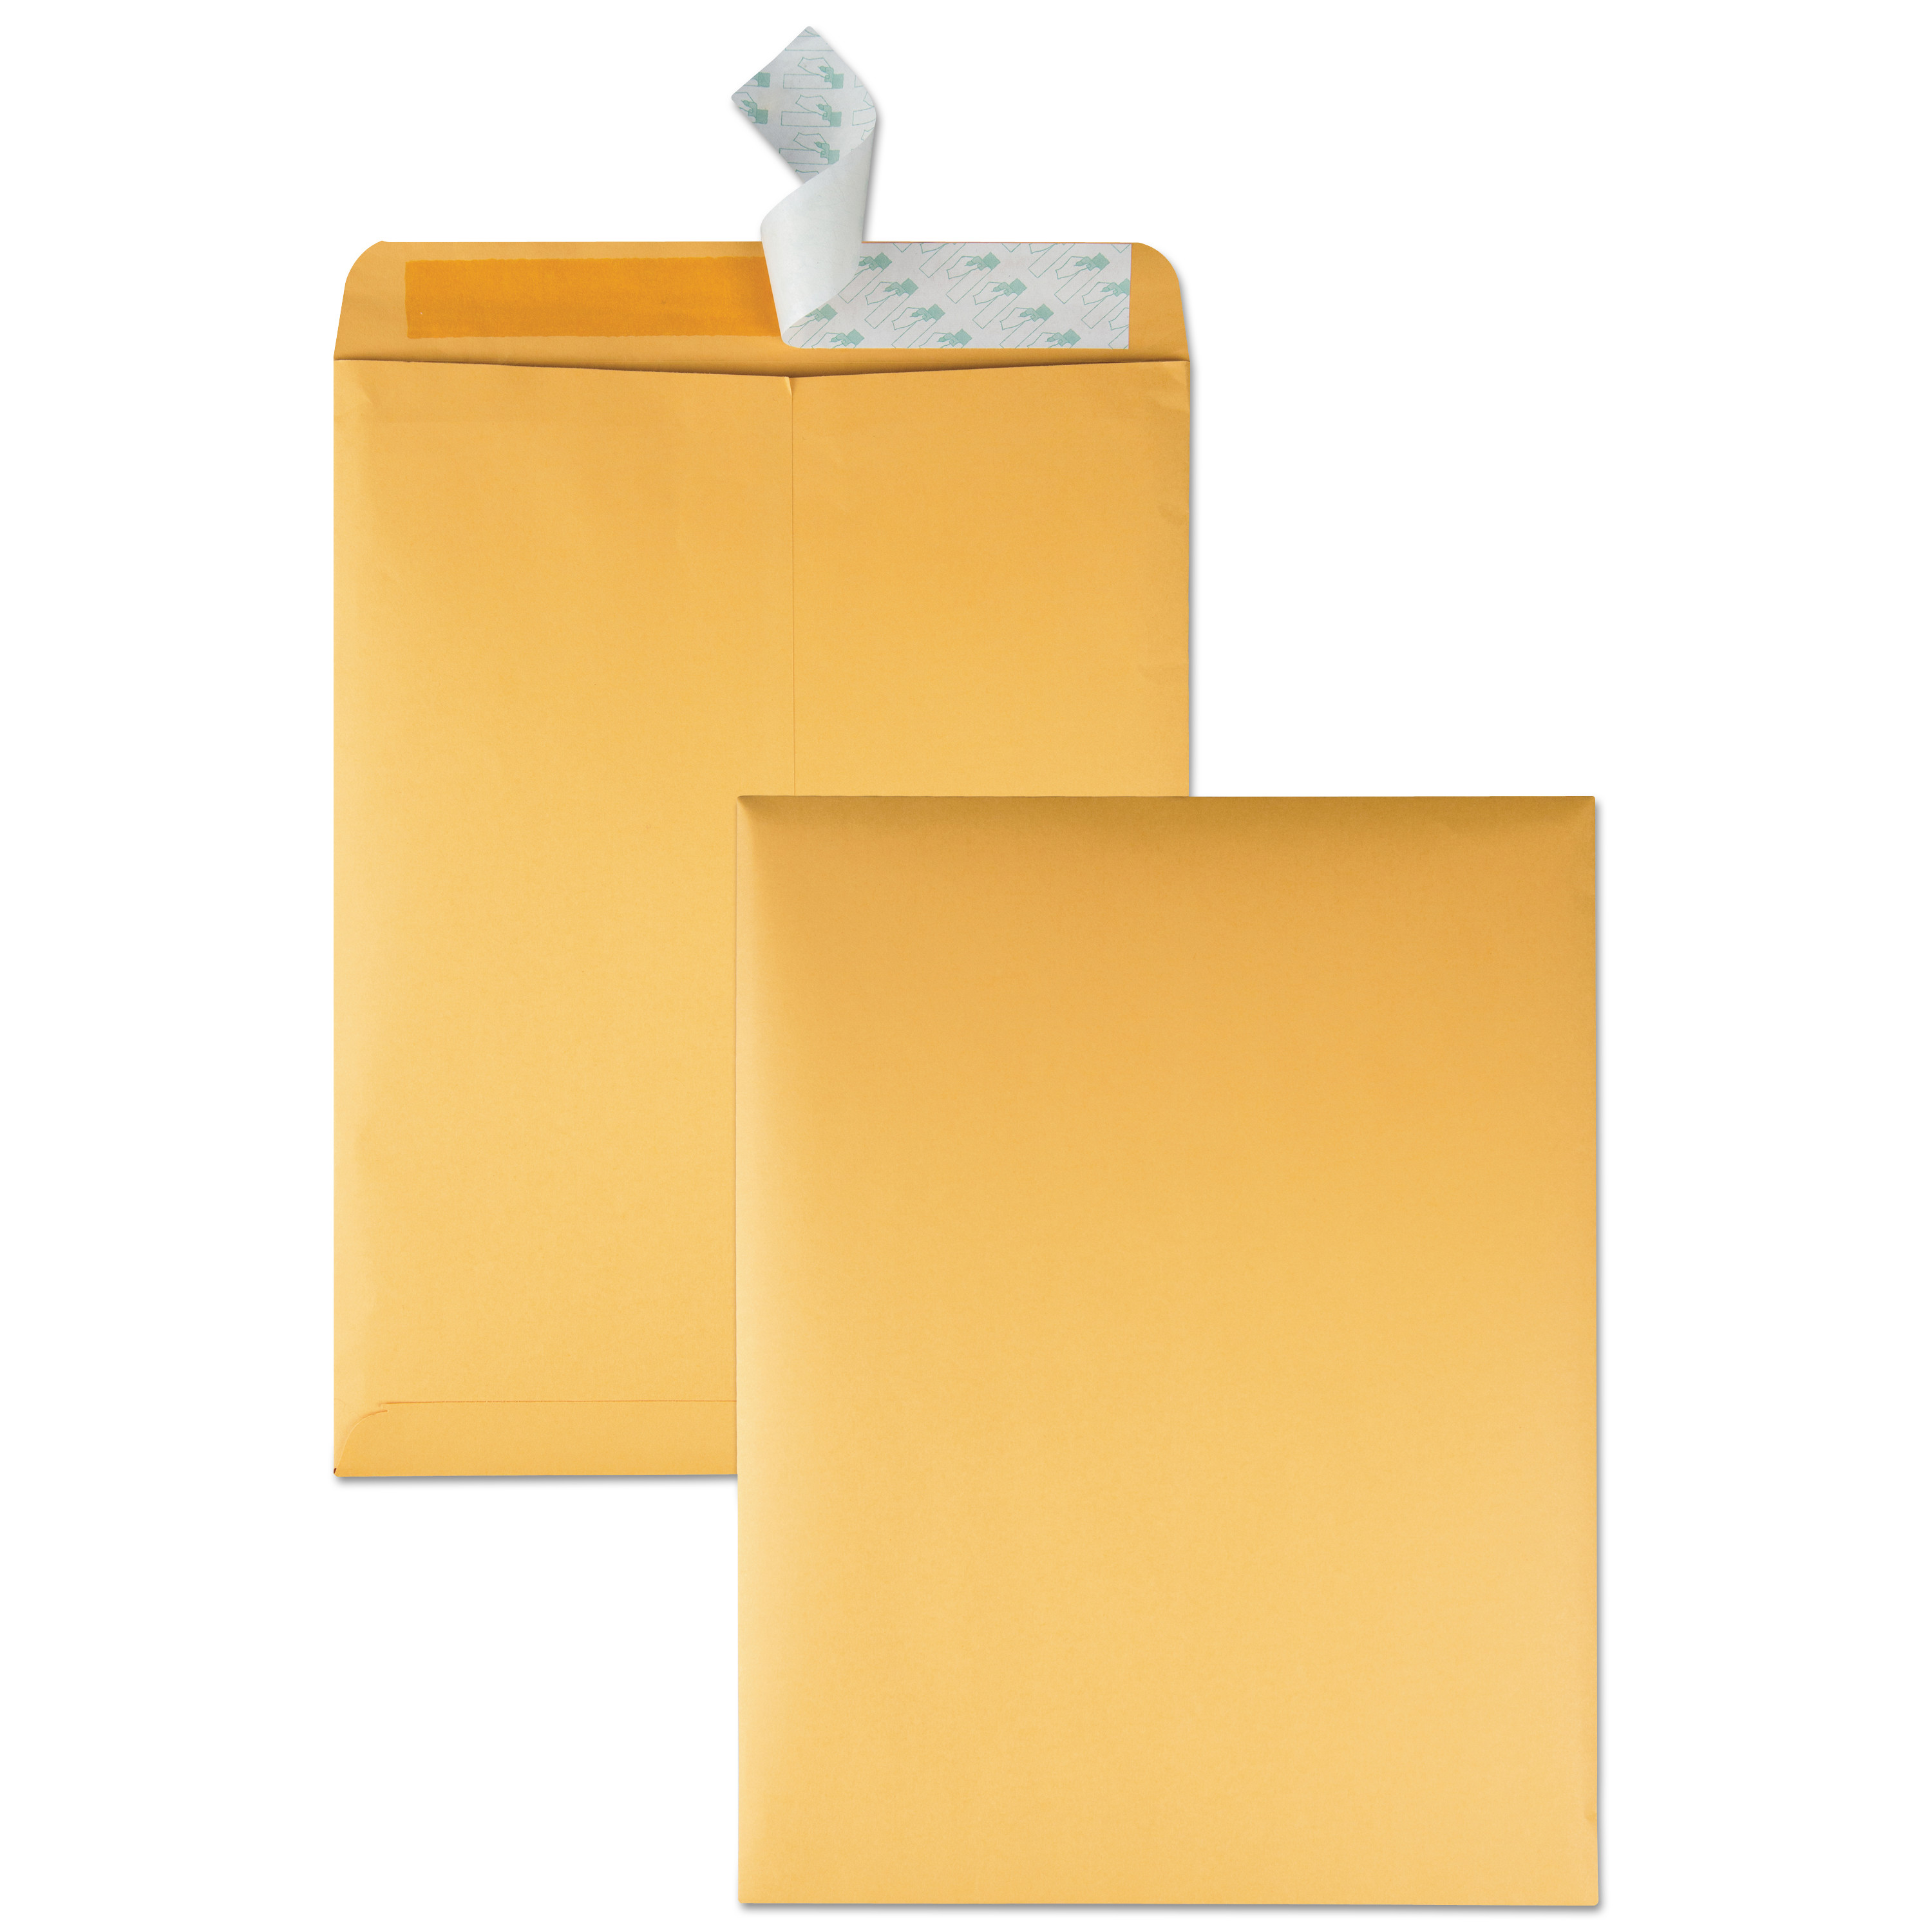  Quality Park QUA44762 Redi-Strip Catalog Envelope, #13 1/2, Cheese Blade Flap, Redi-Strip Closure, 10 x 13, Brown Kraft, 100/Box (QUA44762) 